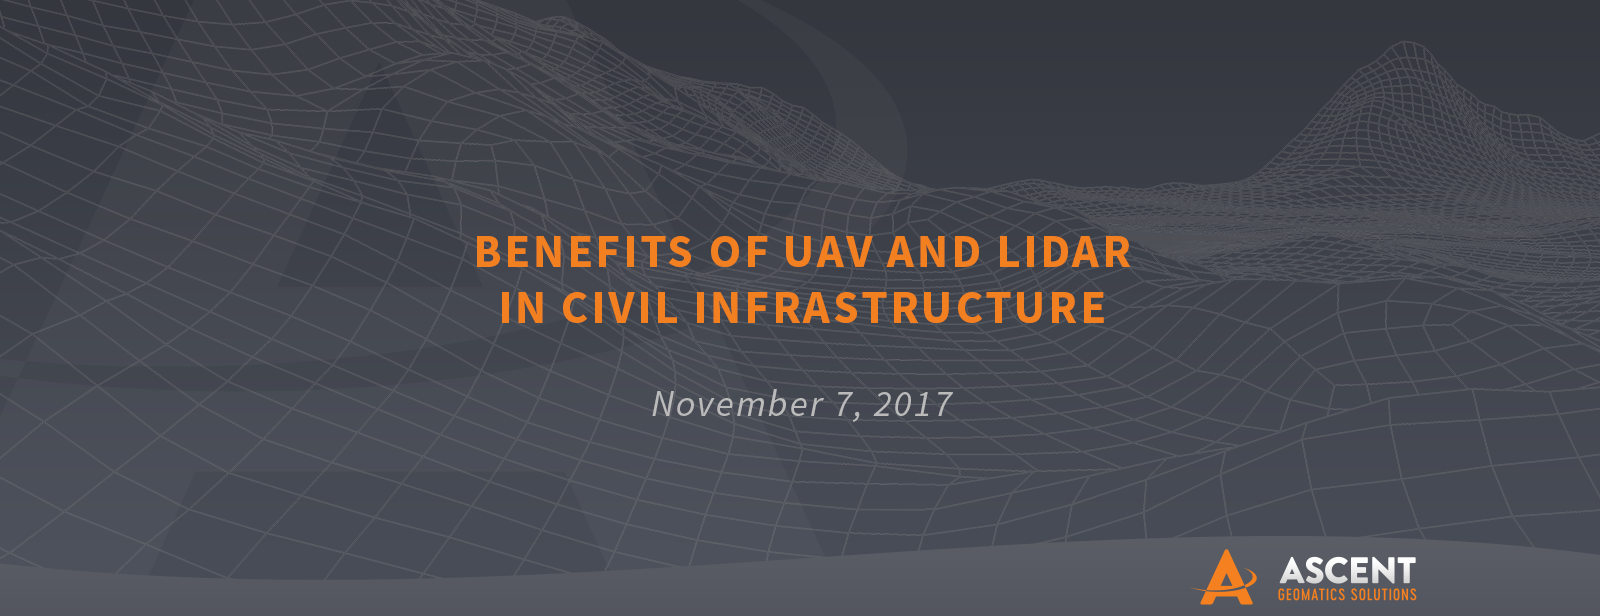 Civil Infrastructure Webinar Banner